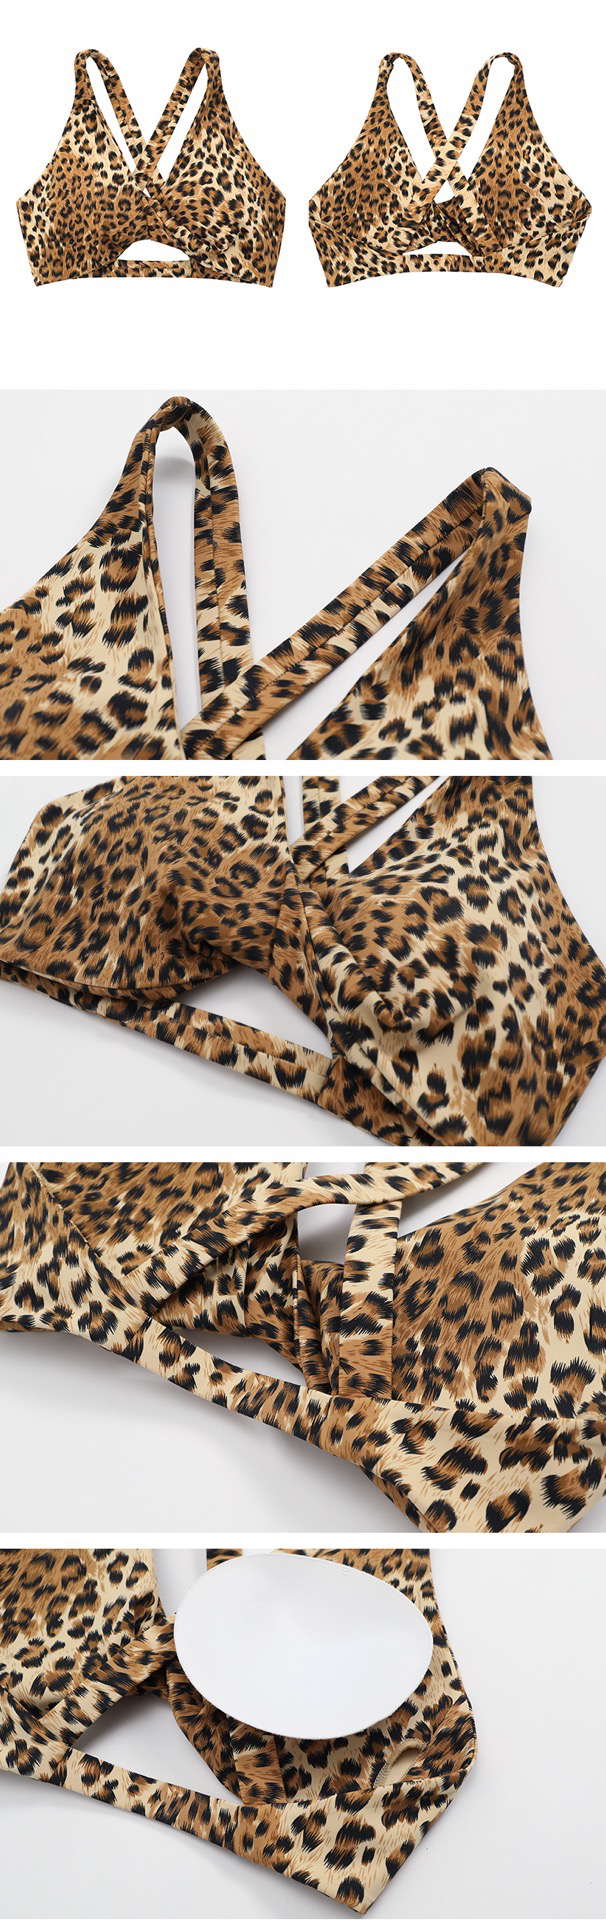 Baddiefit Cheetah Print Bra & Pants Gym Set